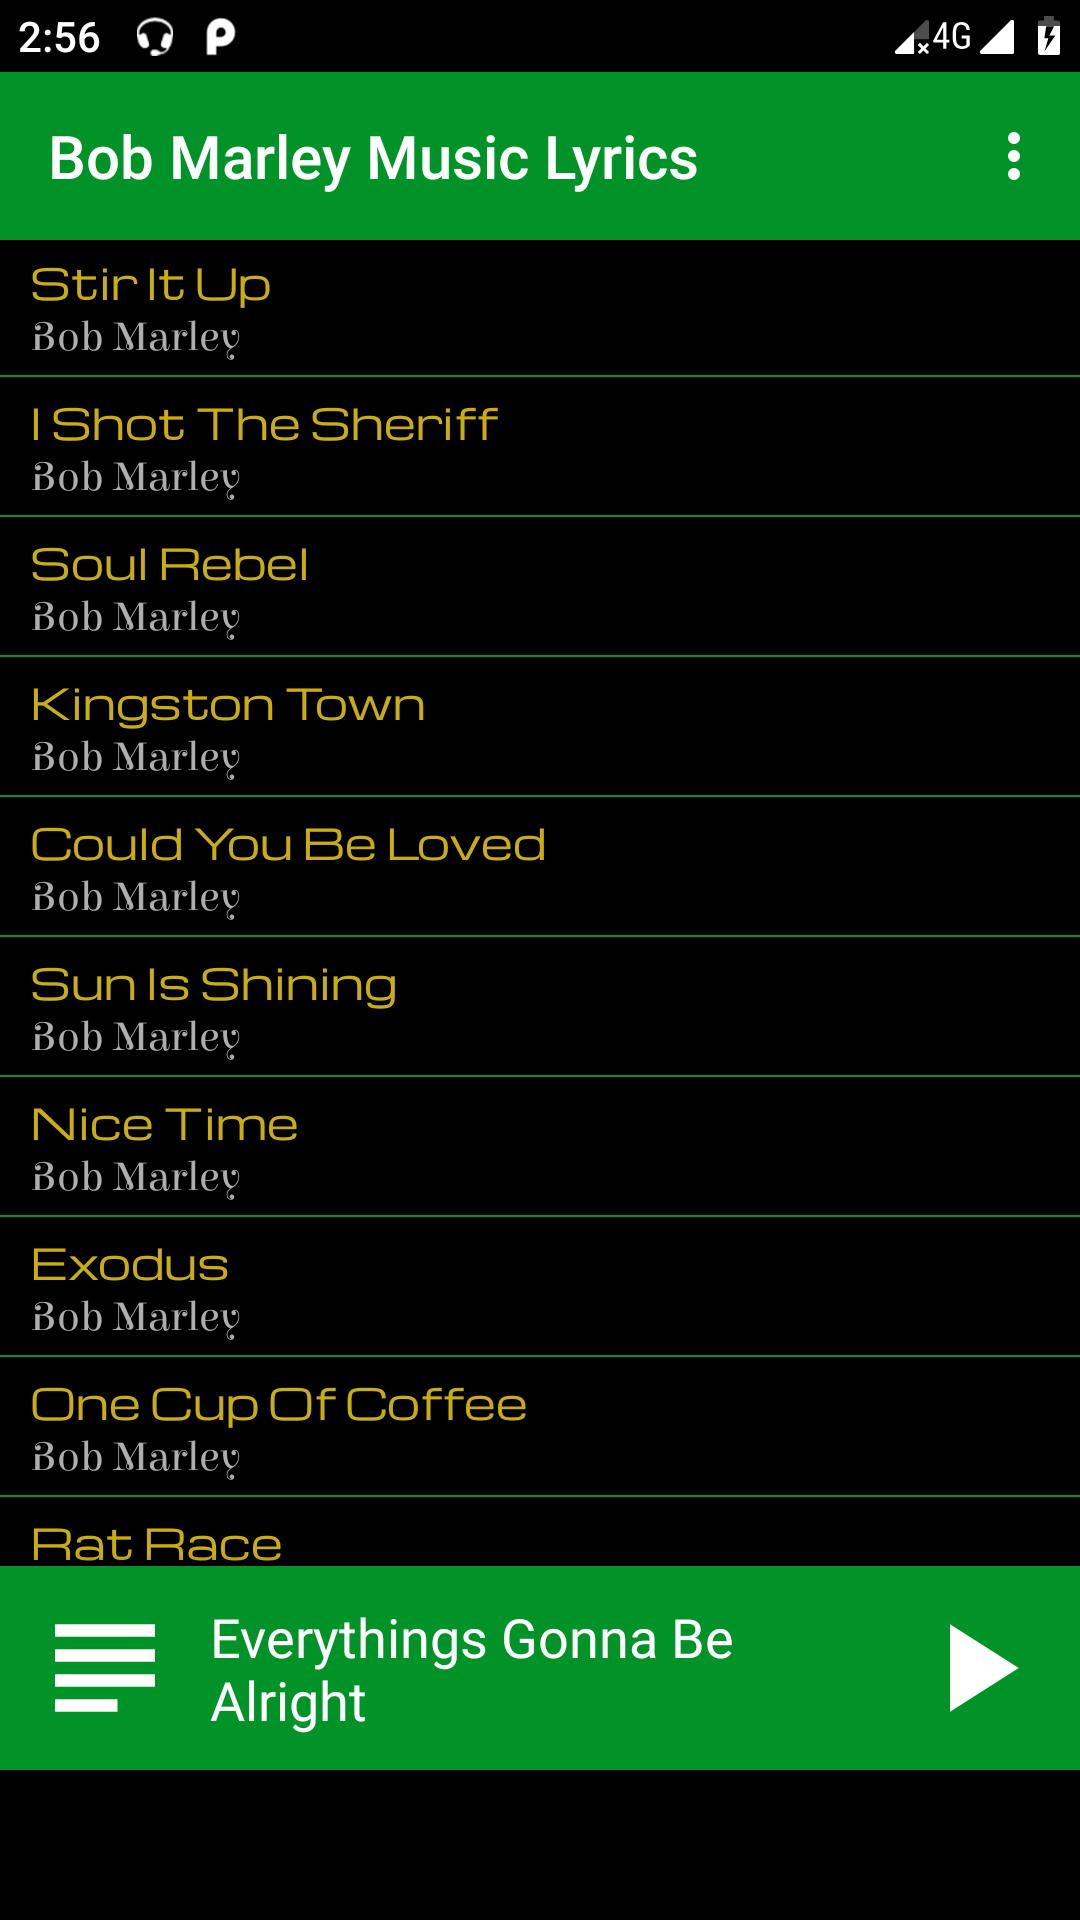 Bob Marley Music Lyrics For Android Apk Download